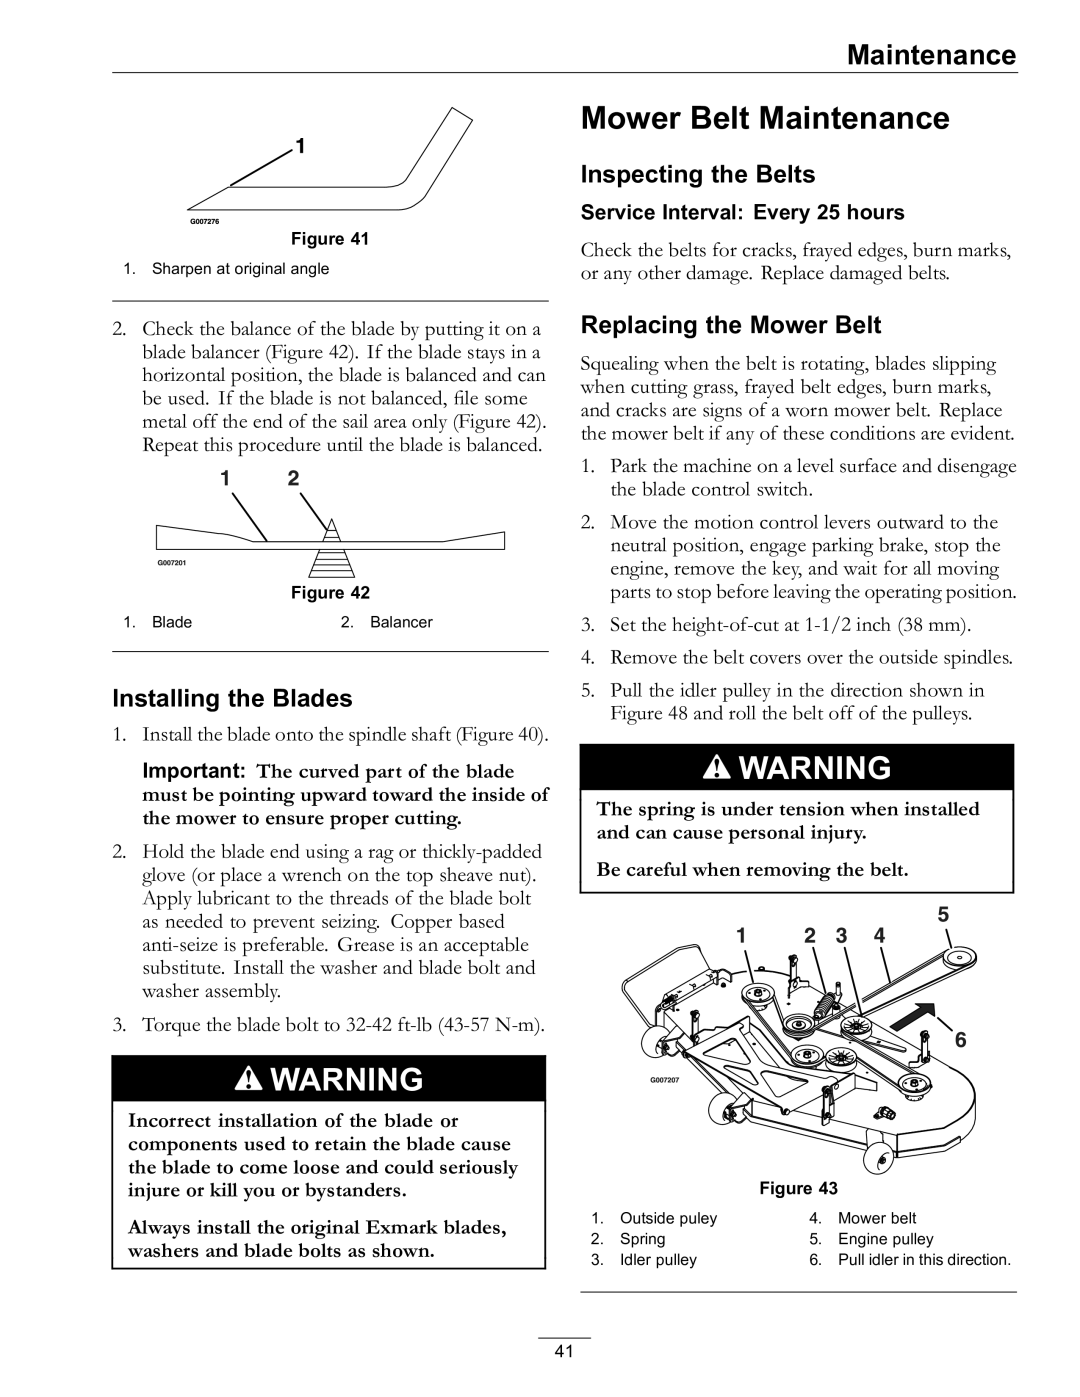 Exmark Lawn Mower manual Mower Belt Maintenance, Installing the Blades, Inspecting the Belts, Replacing the Mower Belt 